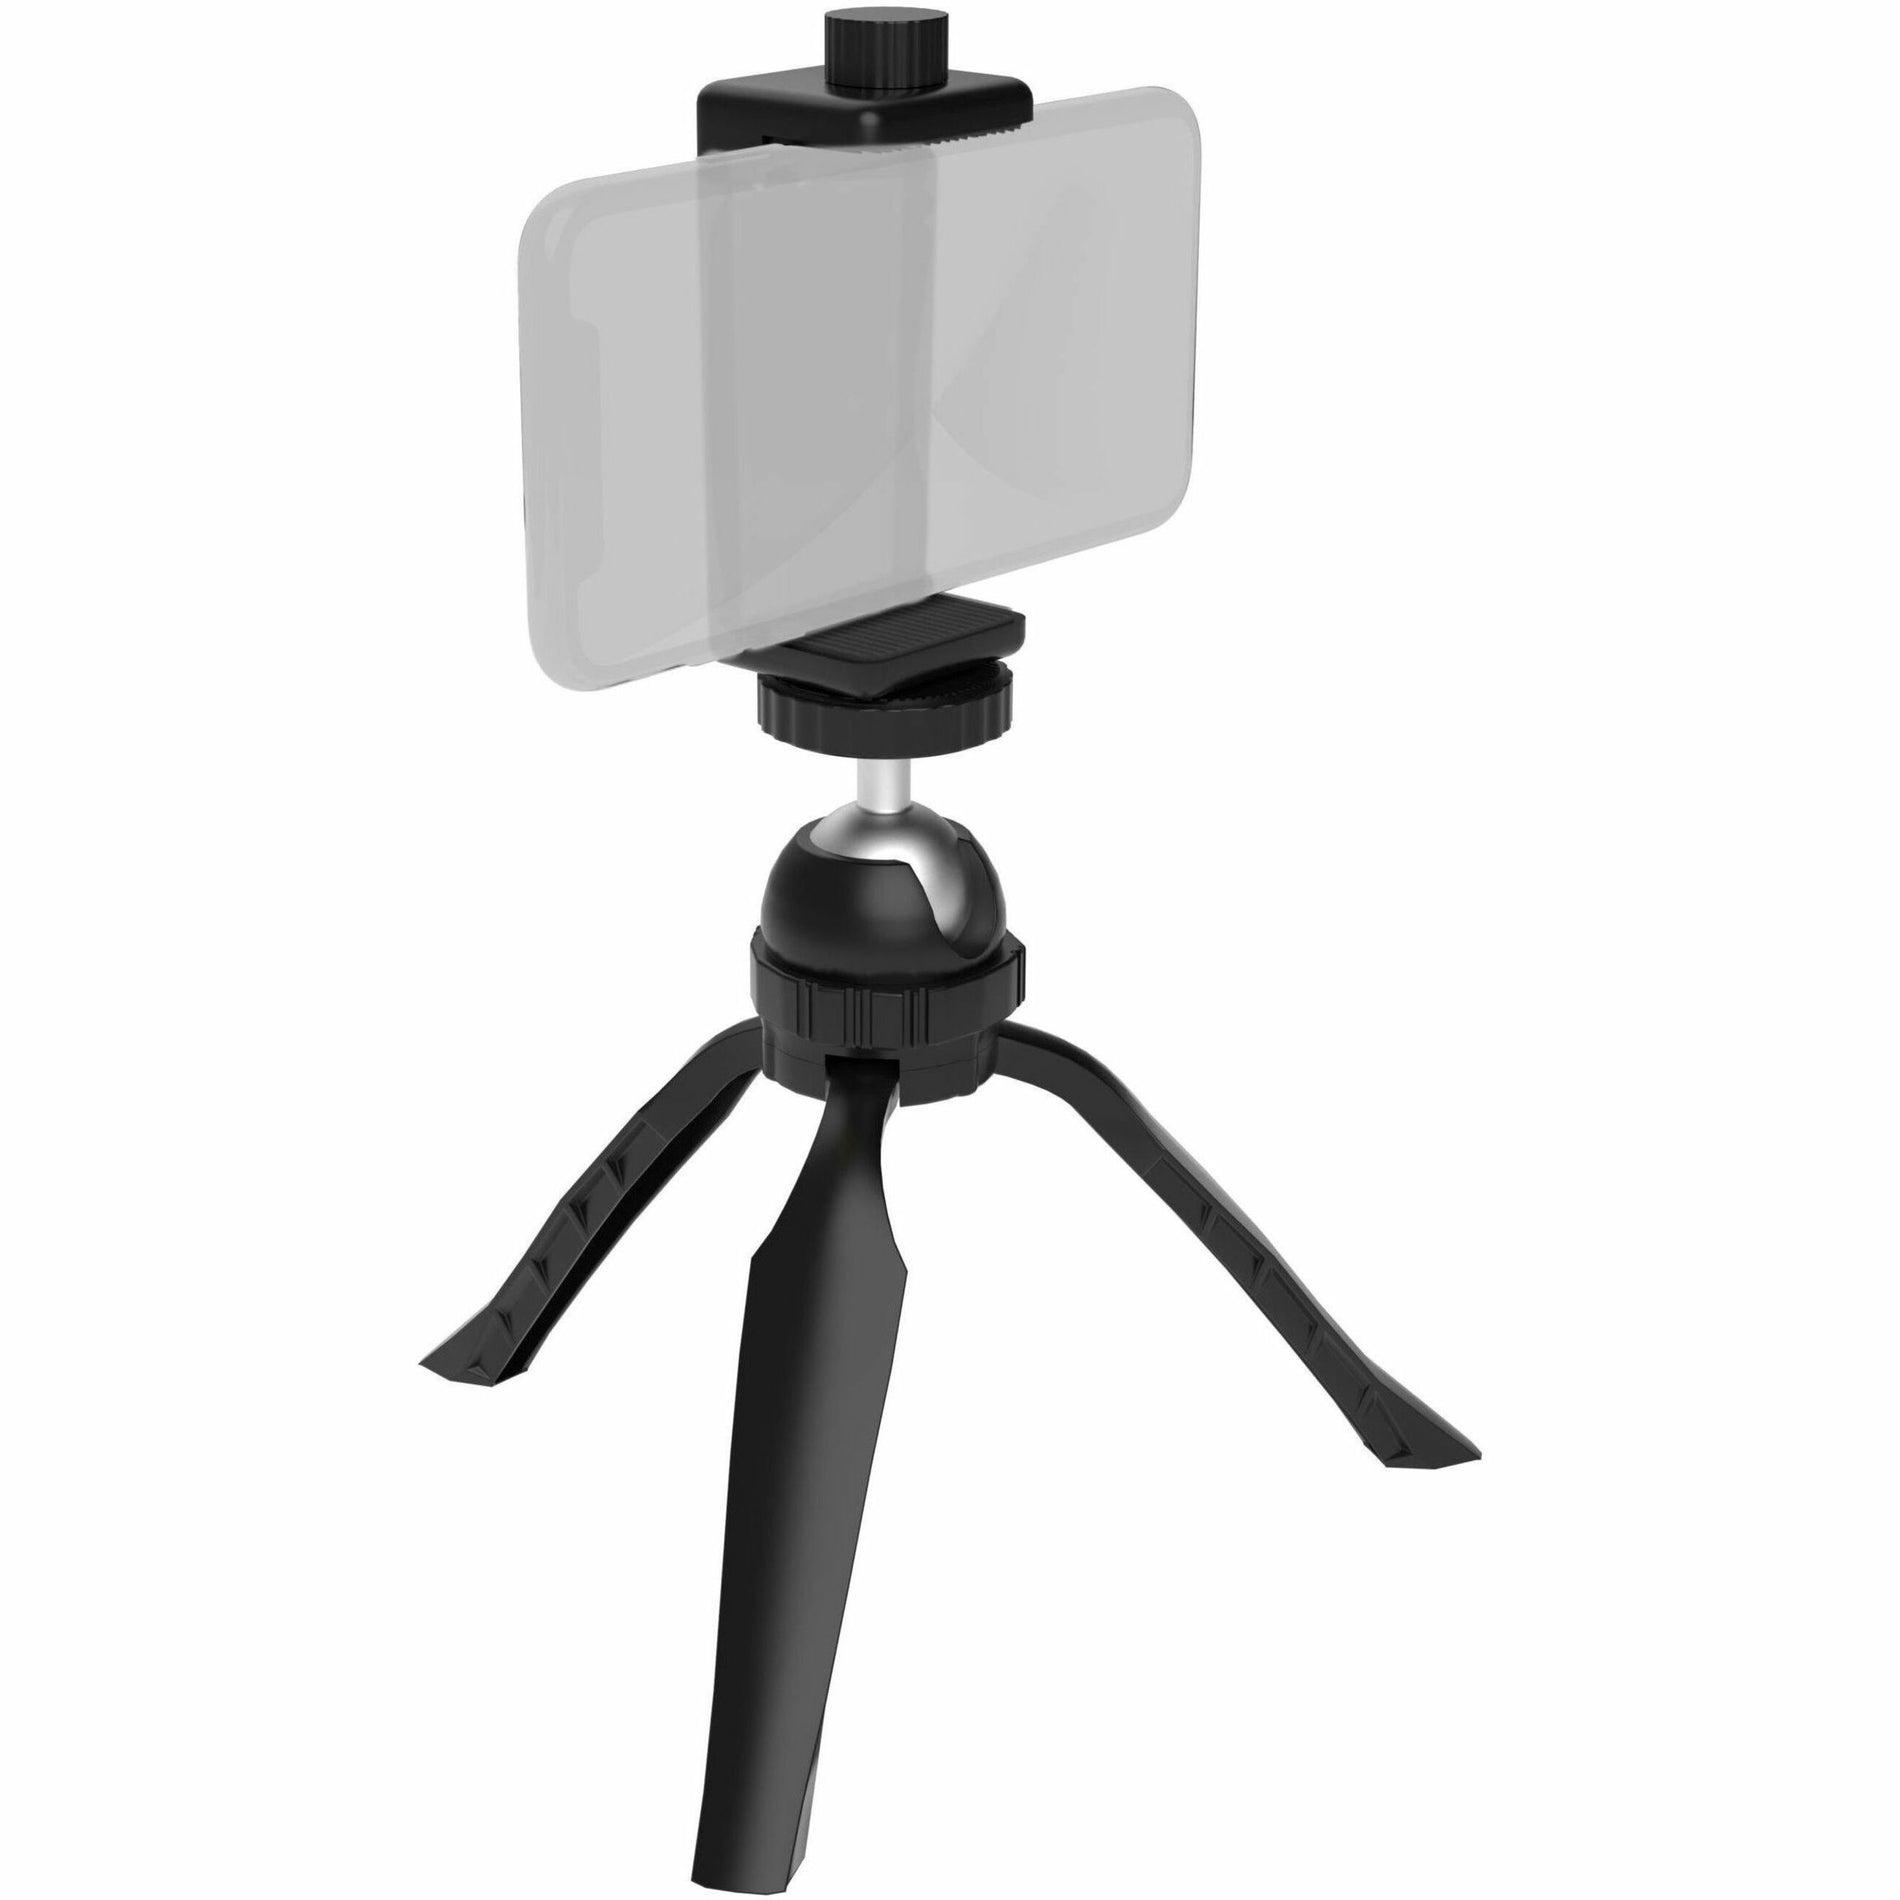 CTA Digital ADD-DESKTRI Tabletop Phone & Camera Tripod Mount, Ball Head, 2.20 lb Load Capacity